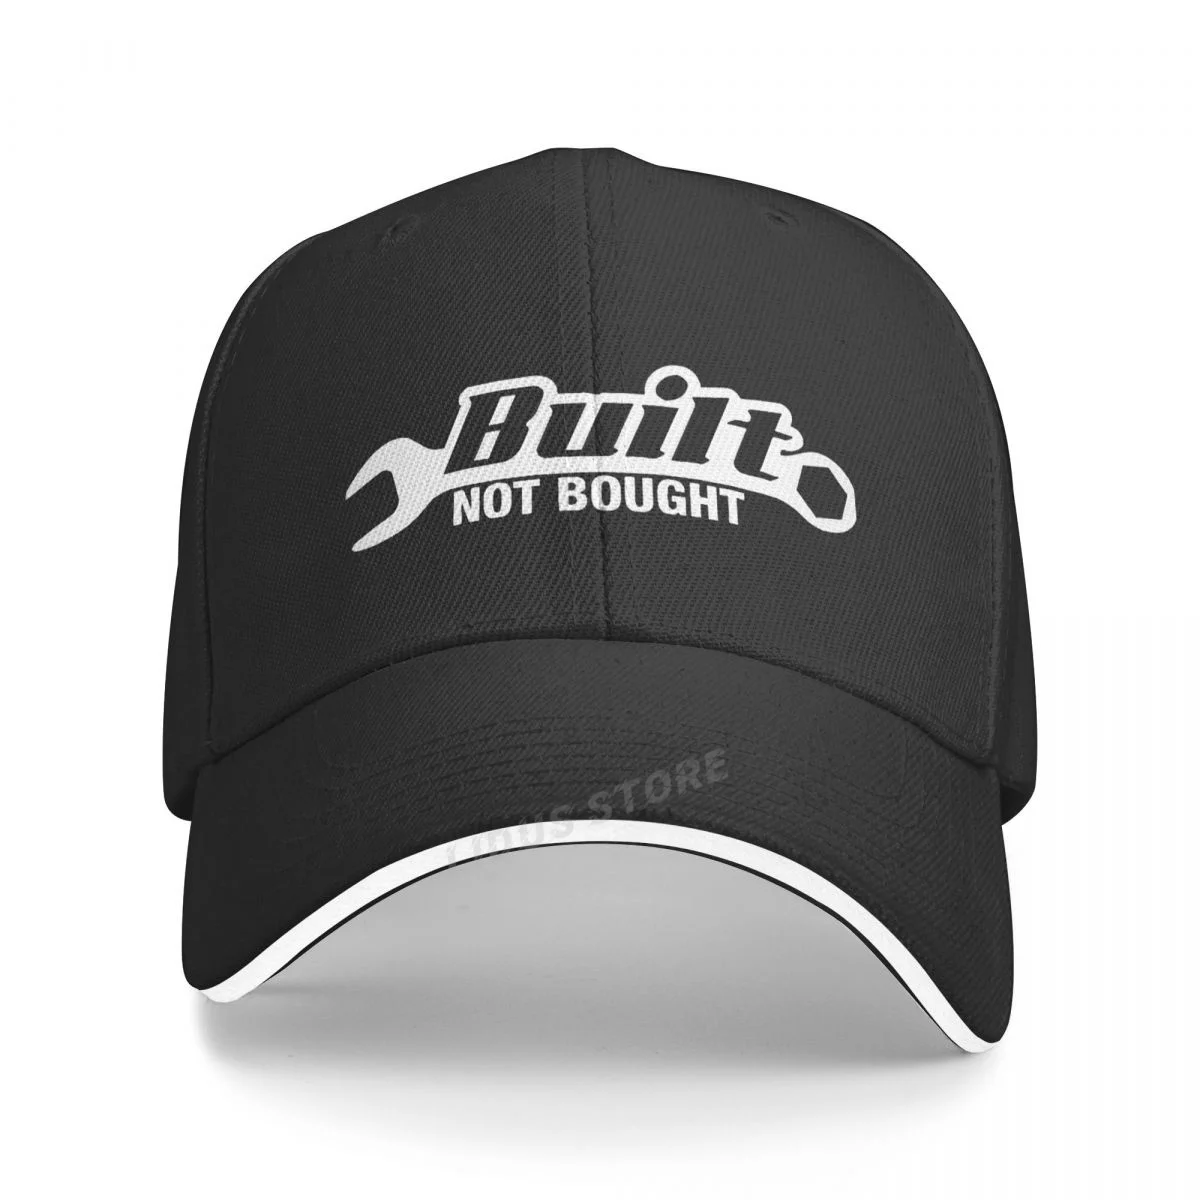 New 100%Cotton Men Hat Built Not Bought Print Baseball Cap - Auto Mechanic Tuner Cap Truck Car Race Unisex Snapback Hats Gorras